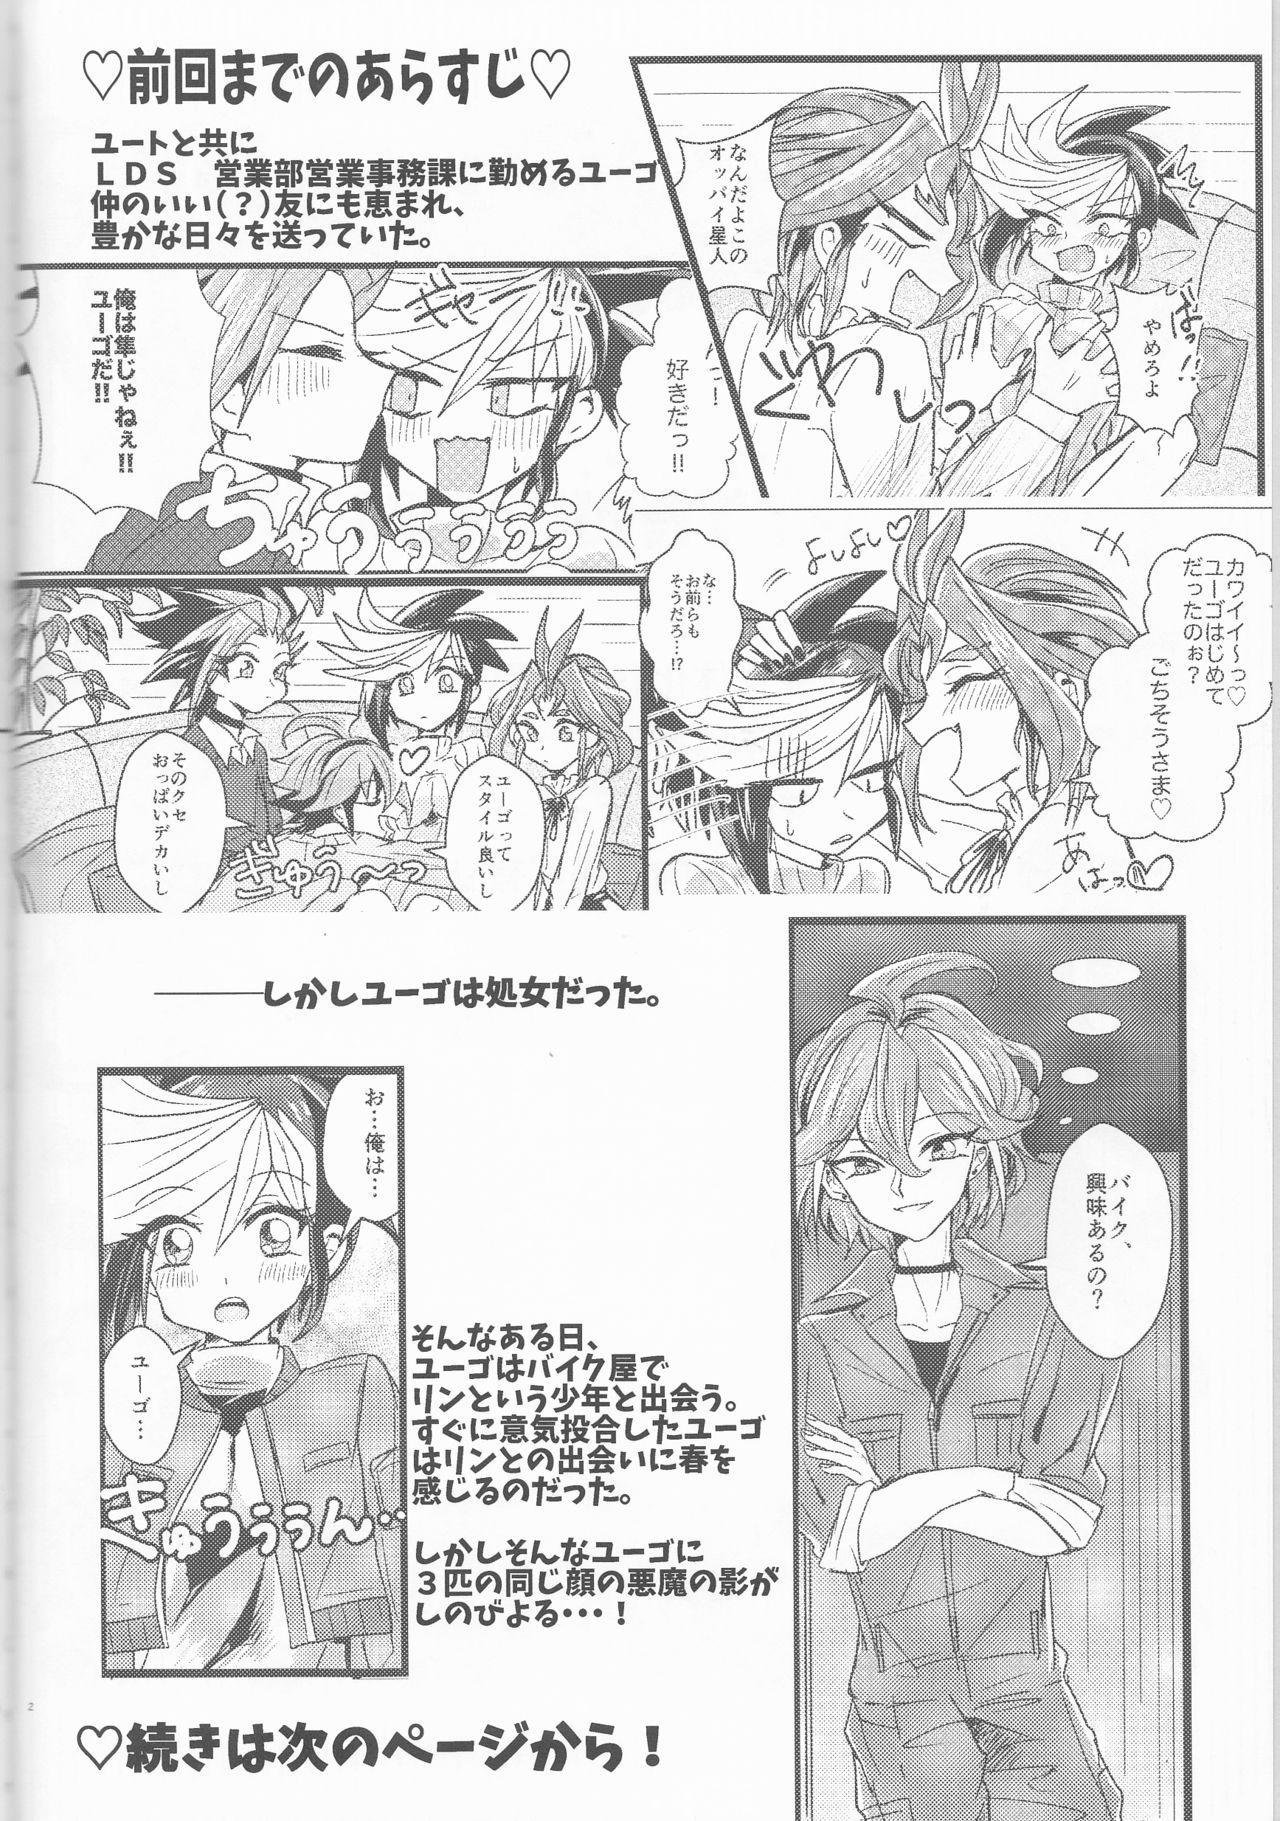 Short LDS Hishoka no Himitsu II - Yu-gi-oh arc-v Internal - Page 3